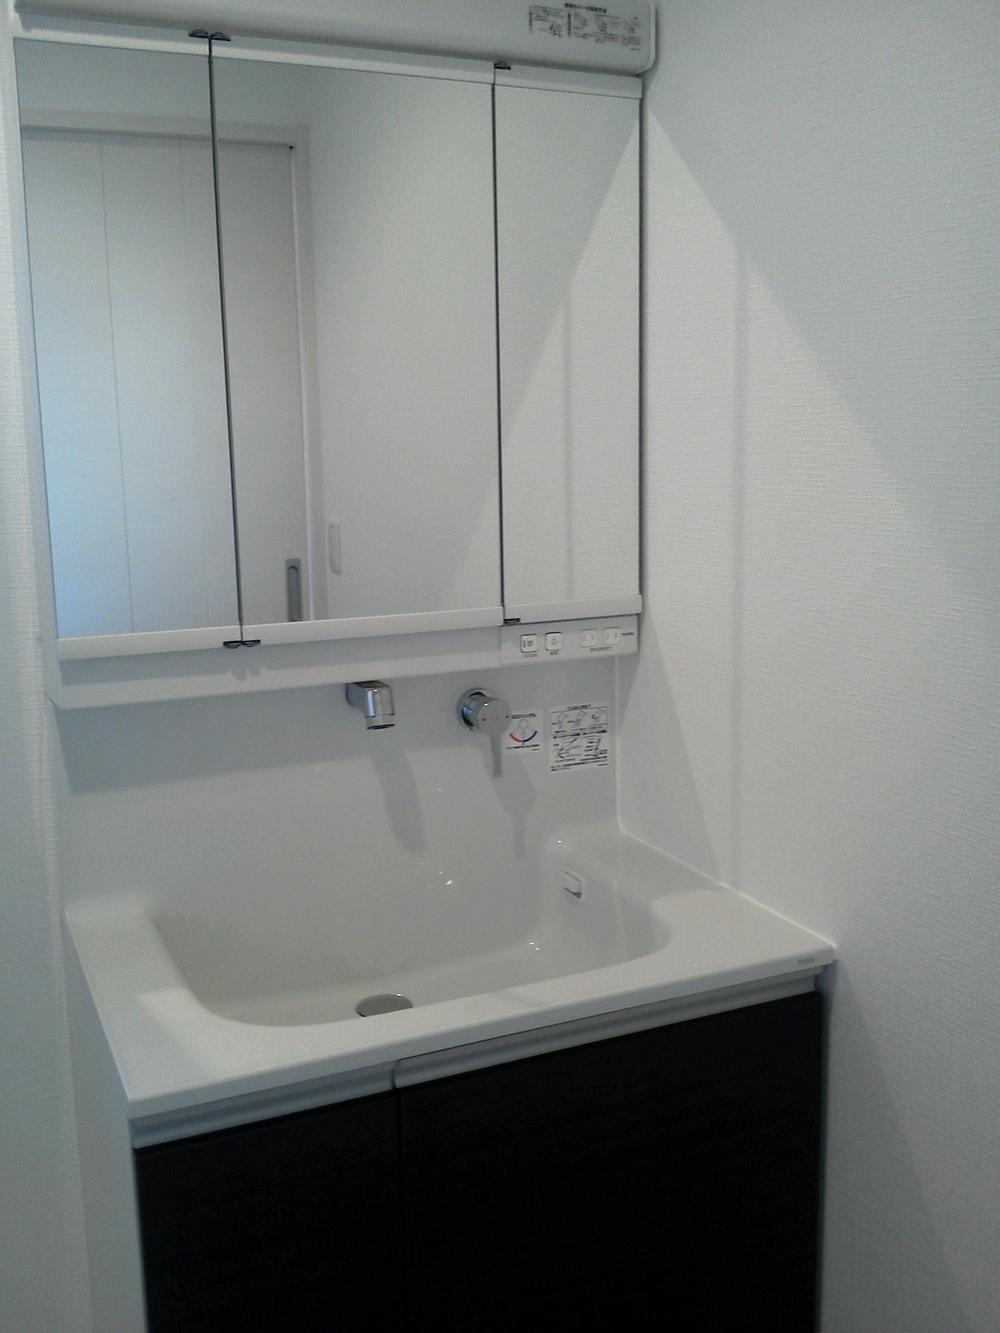 Wash basin, toilet. Example of construction design ・ Color select corresponding